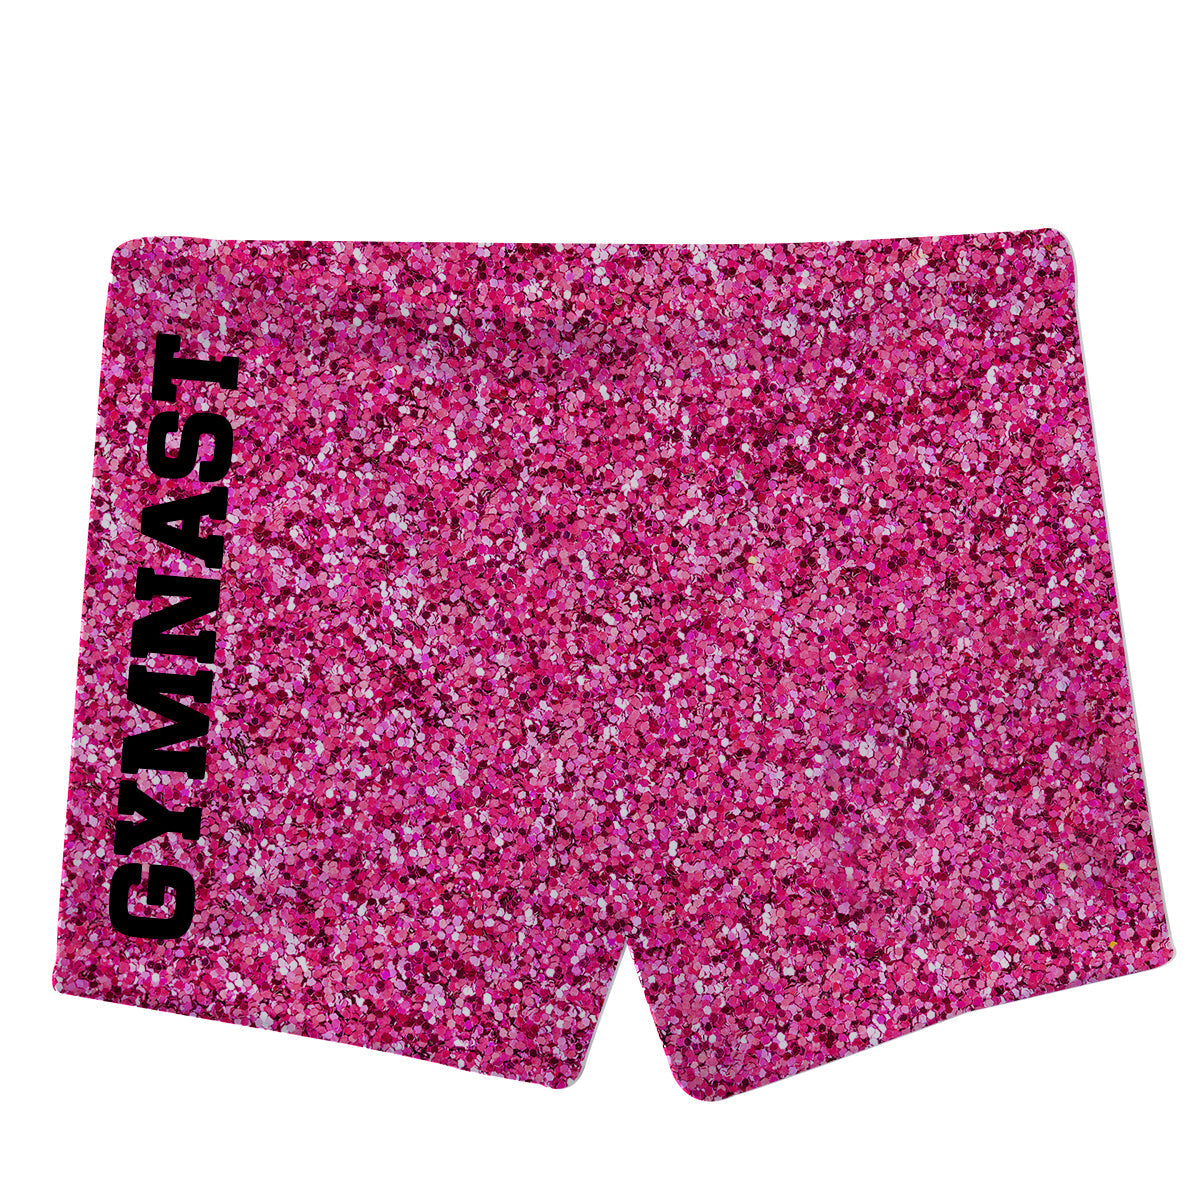 Hot glitter gymnast shorts with monogram - Wimziy&Co.